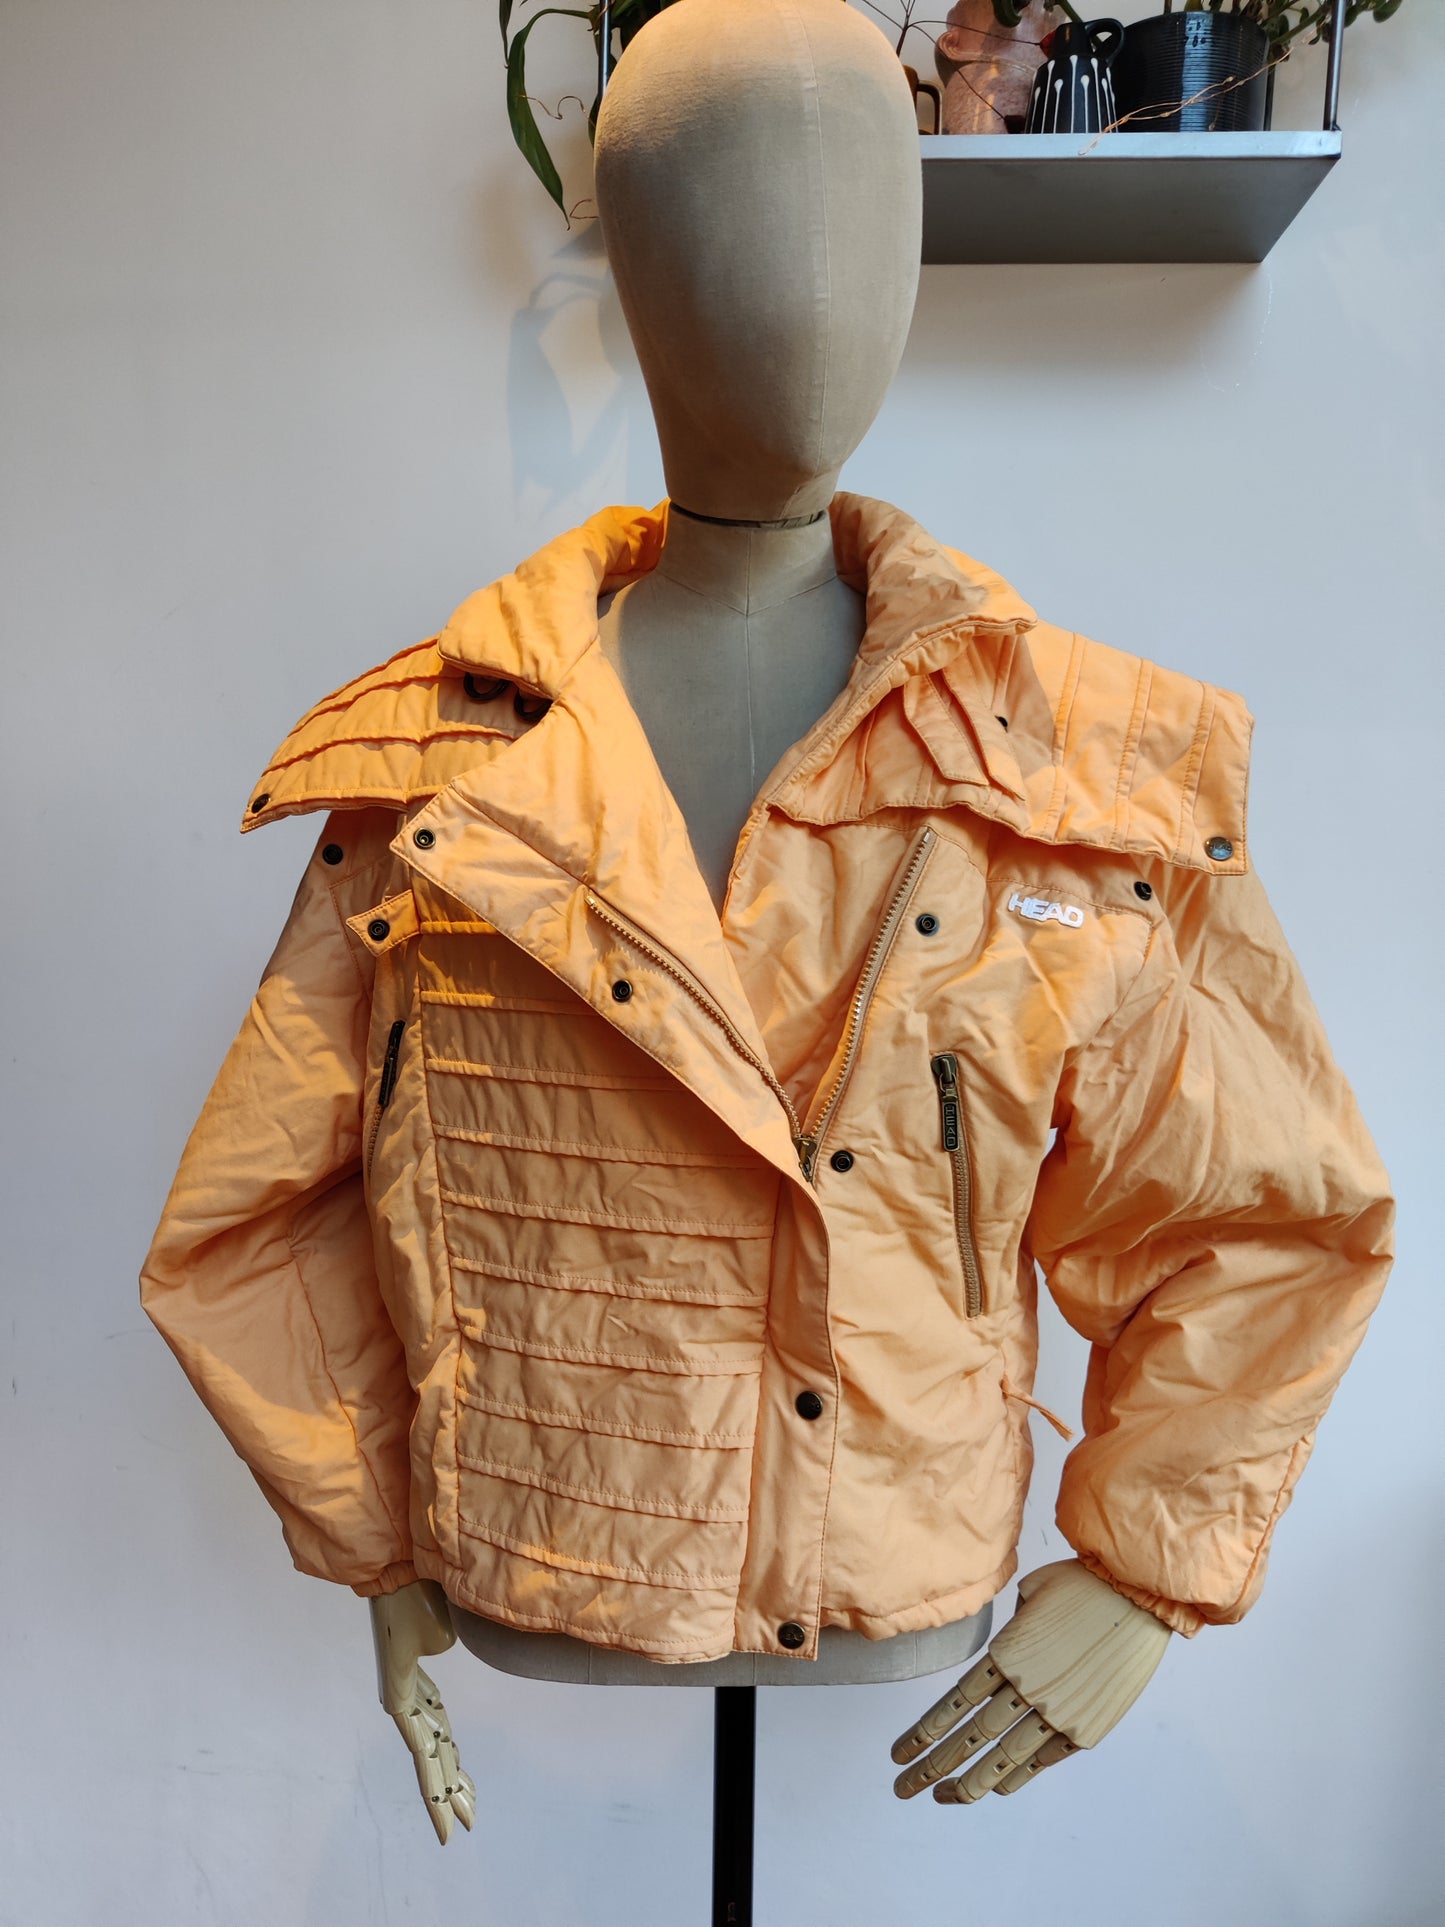 Incredible peach 80s Head ski jacket size 10-12.